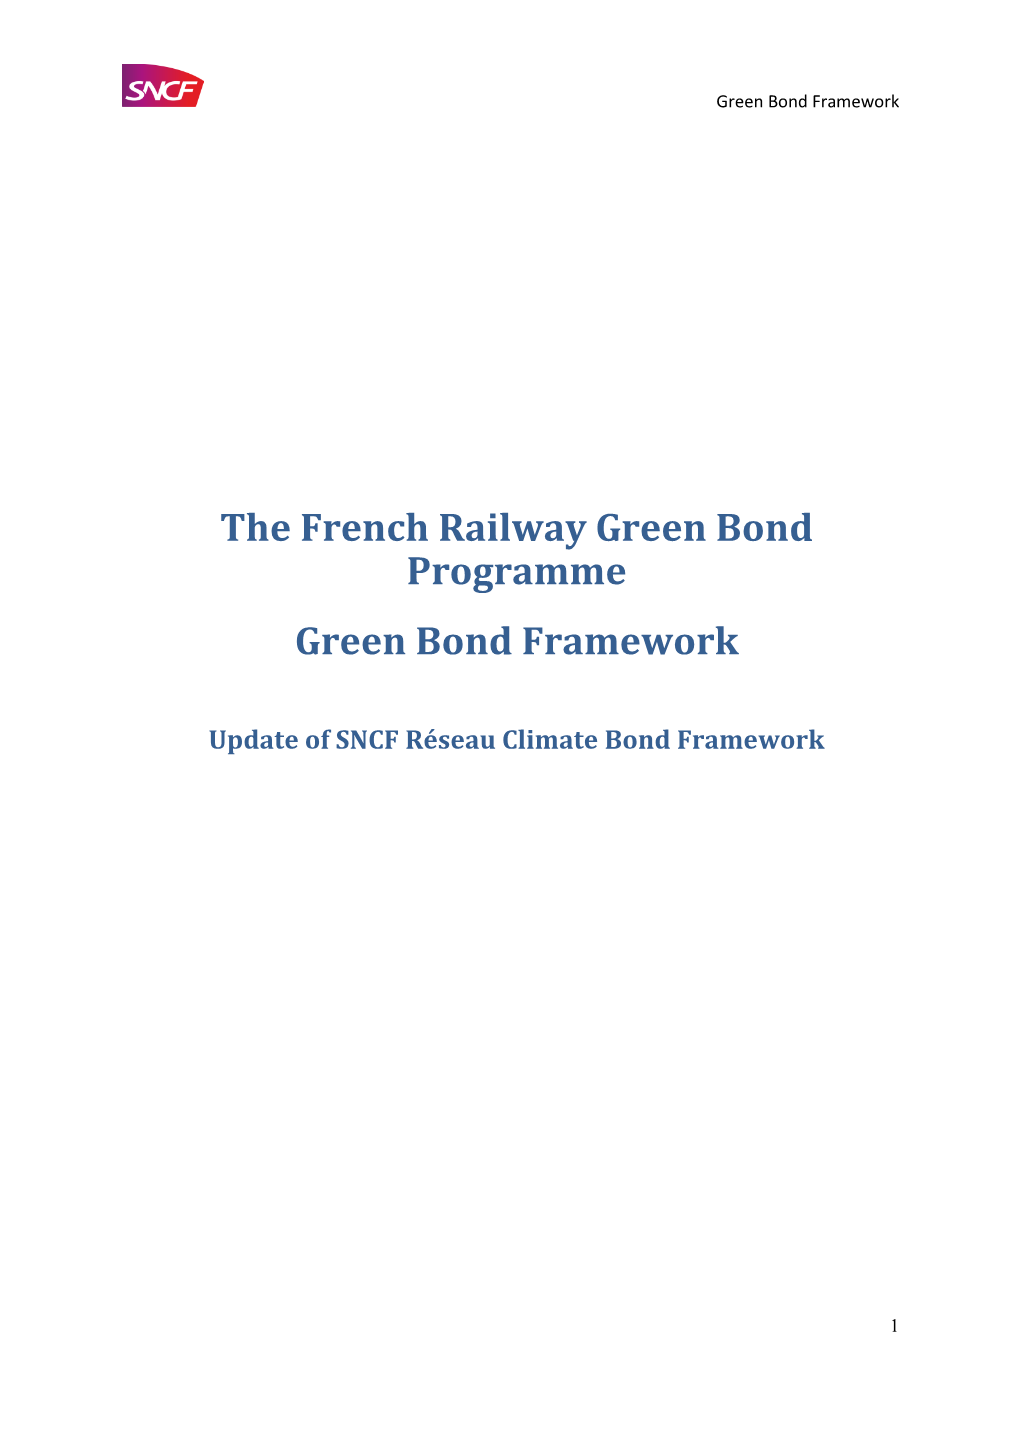 The French Railway Green Bond Programme Green Bond Framework